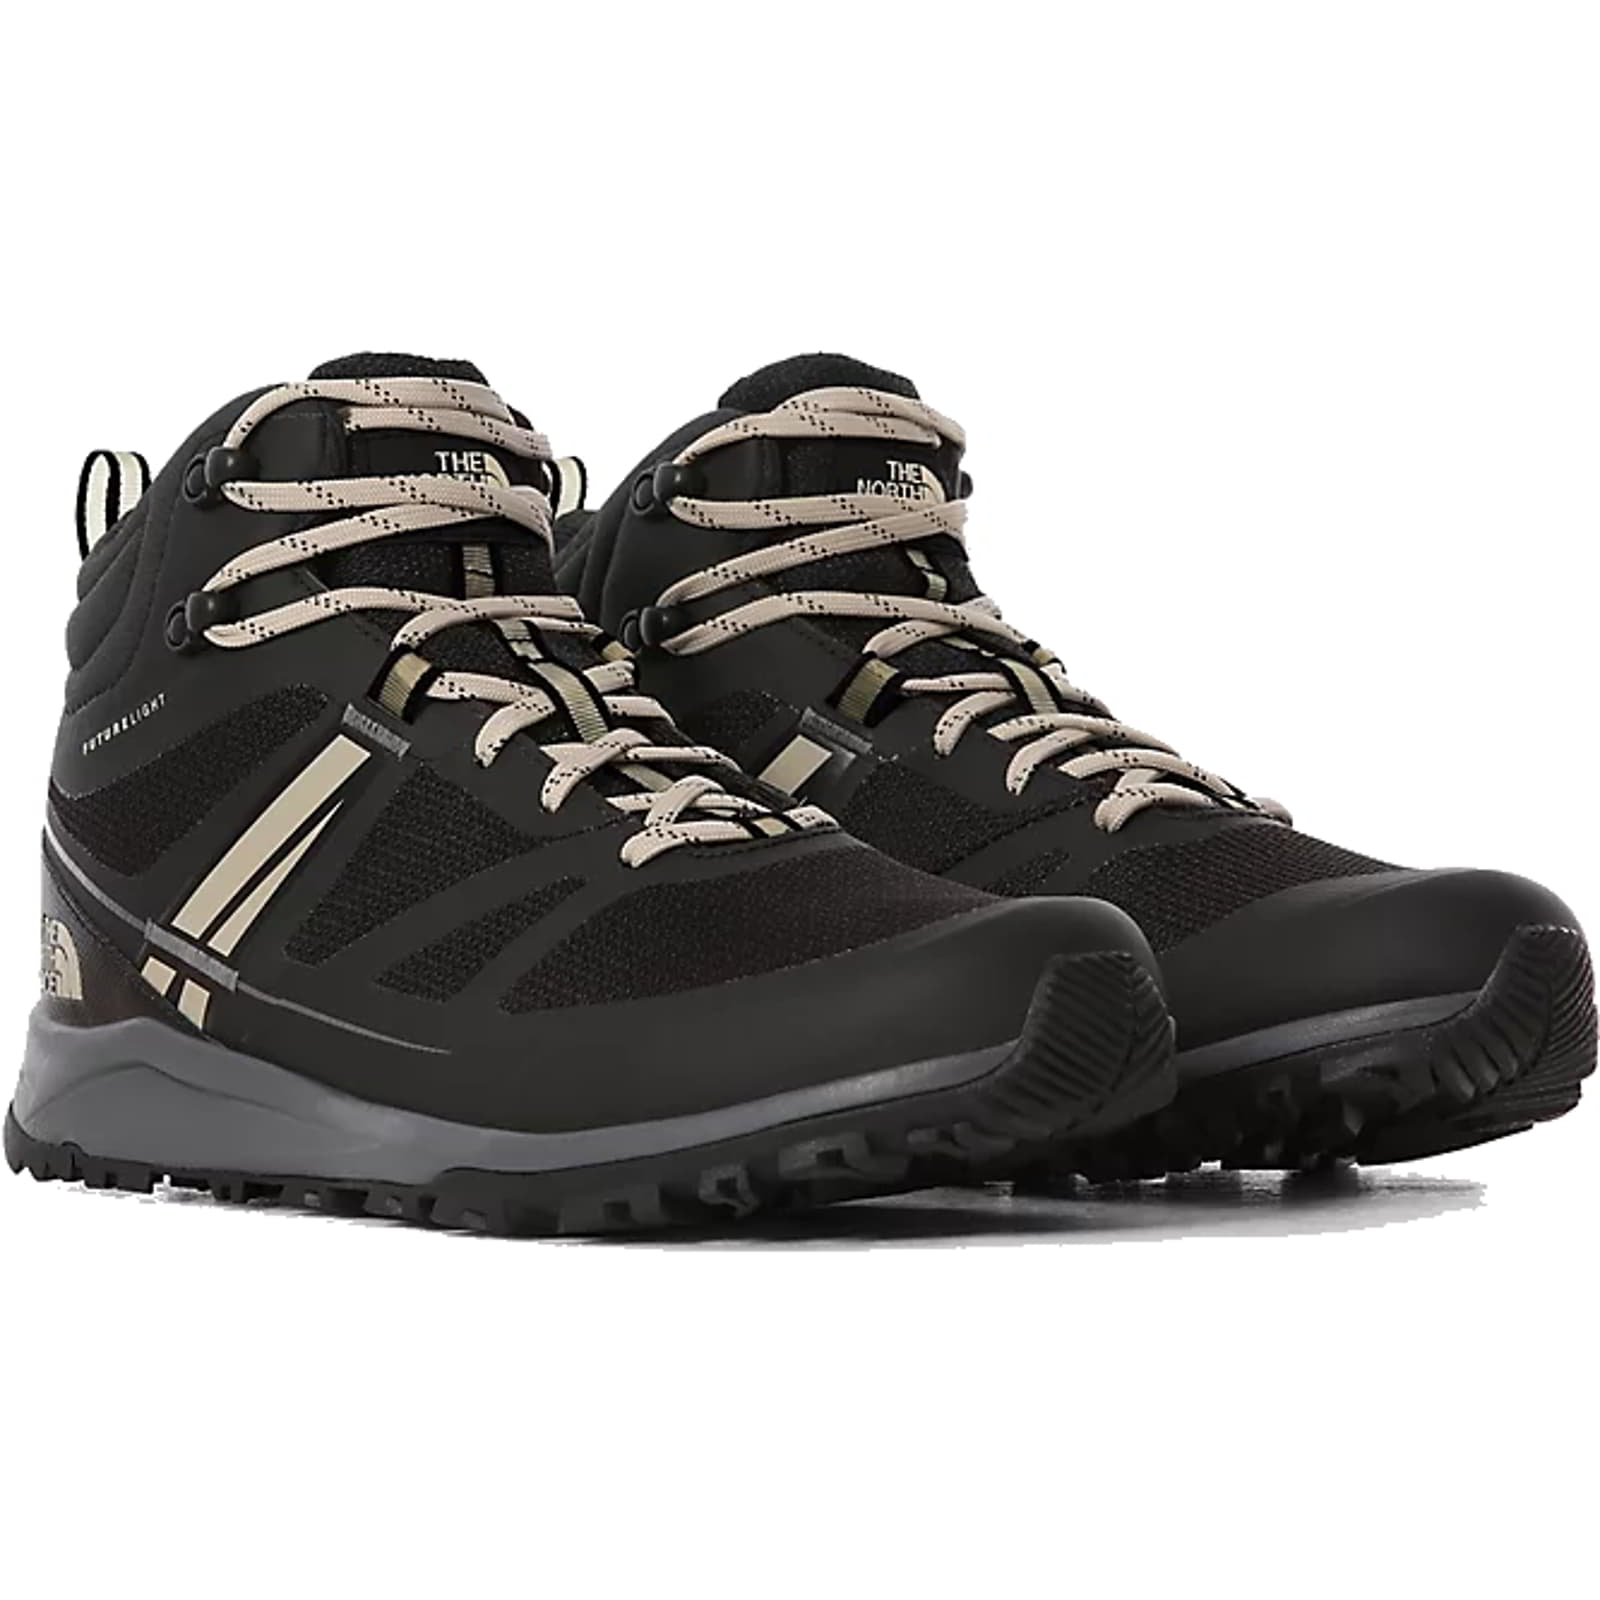 North Face Men's Litewave Mid Futurelight Waterproof Walking Ankle Boots - UK 11 / US 12